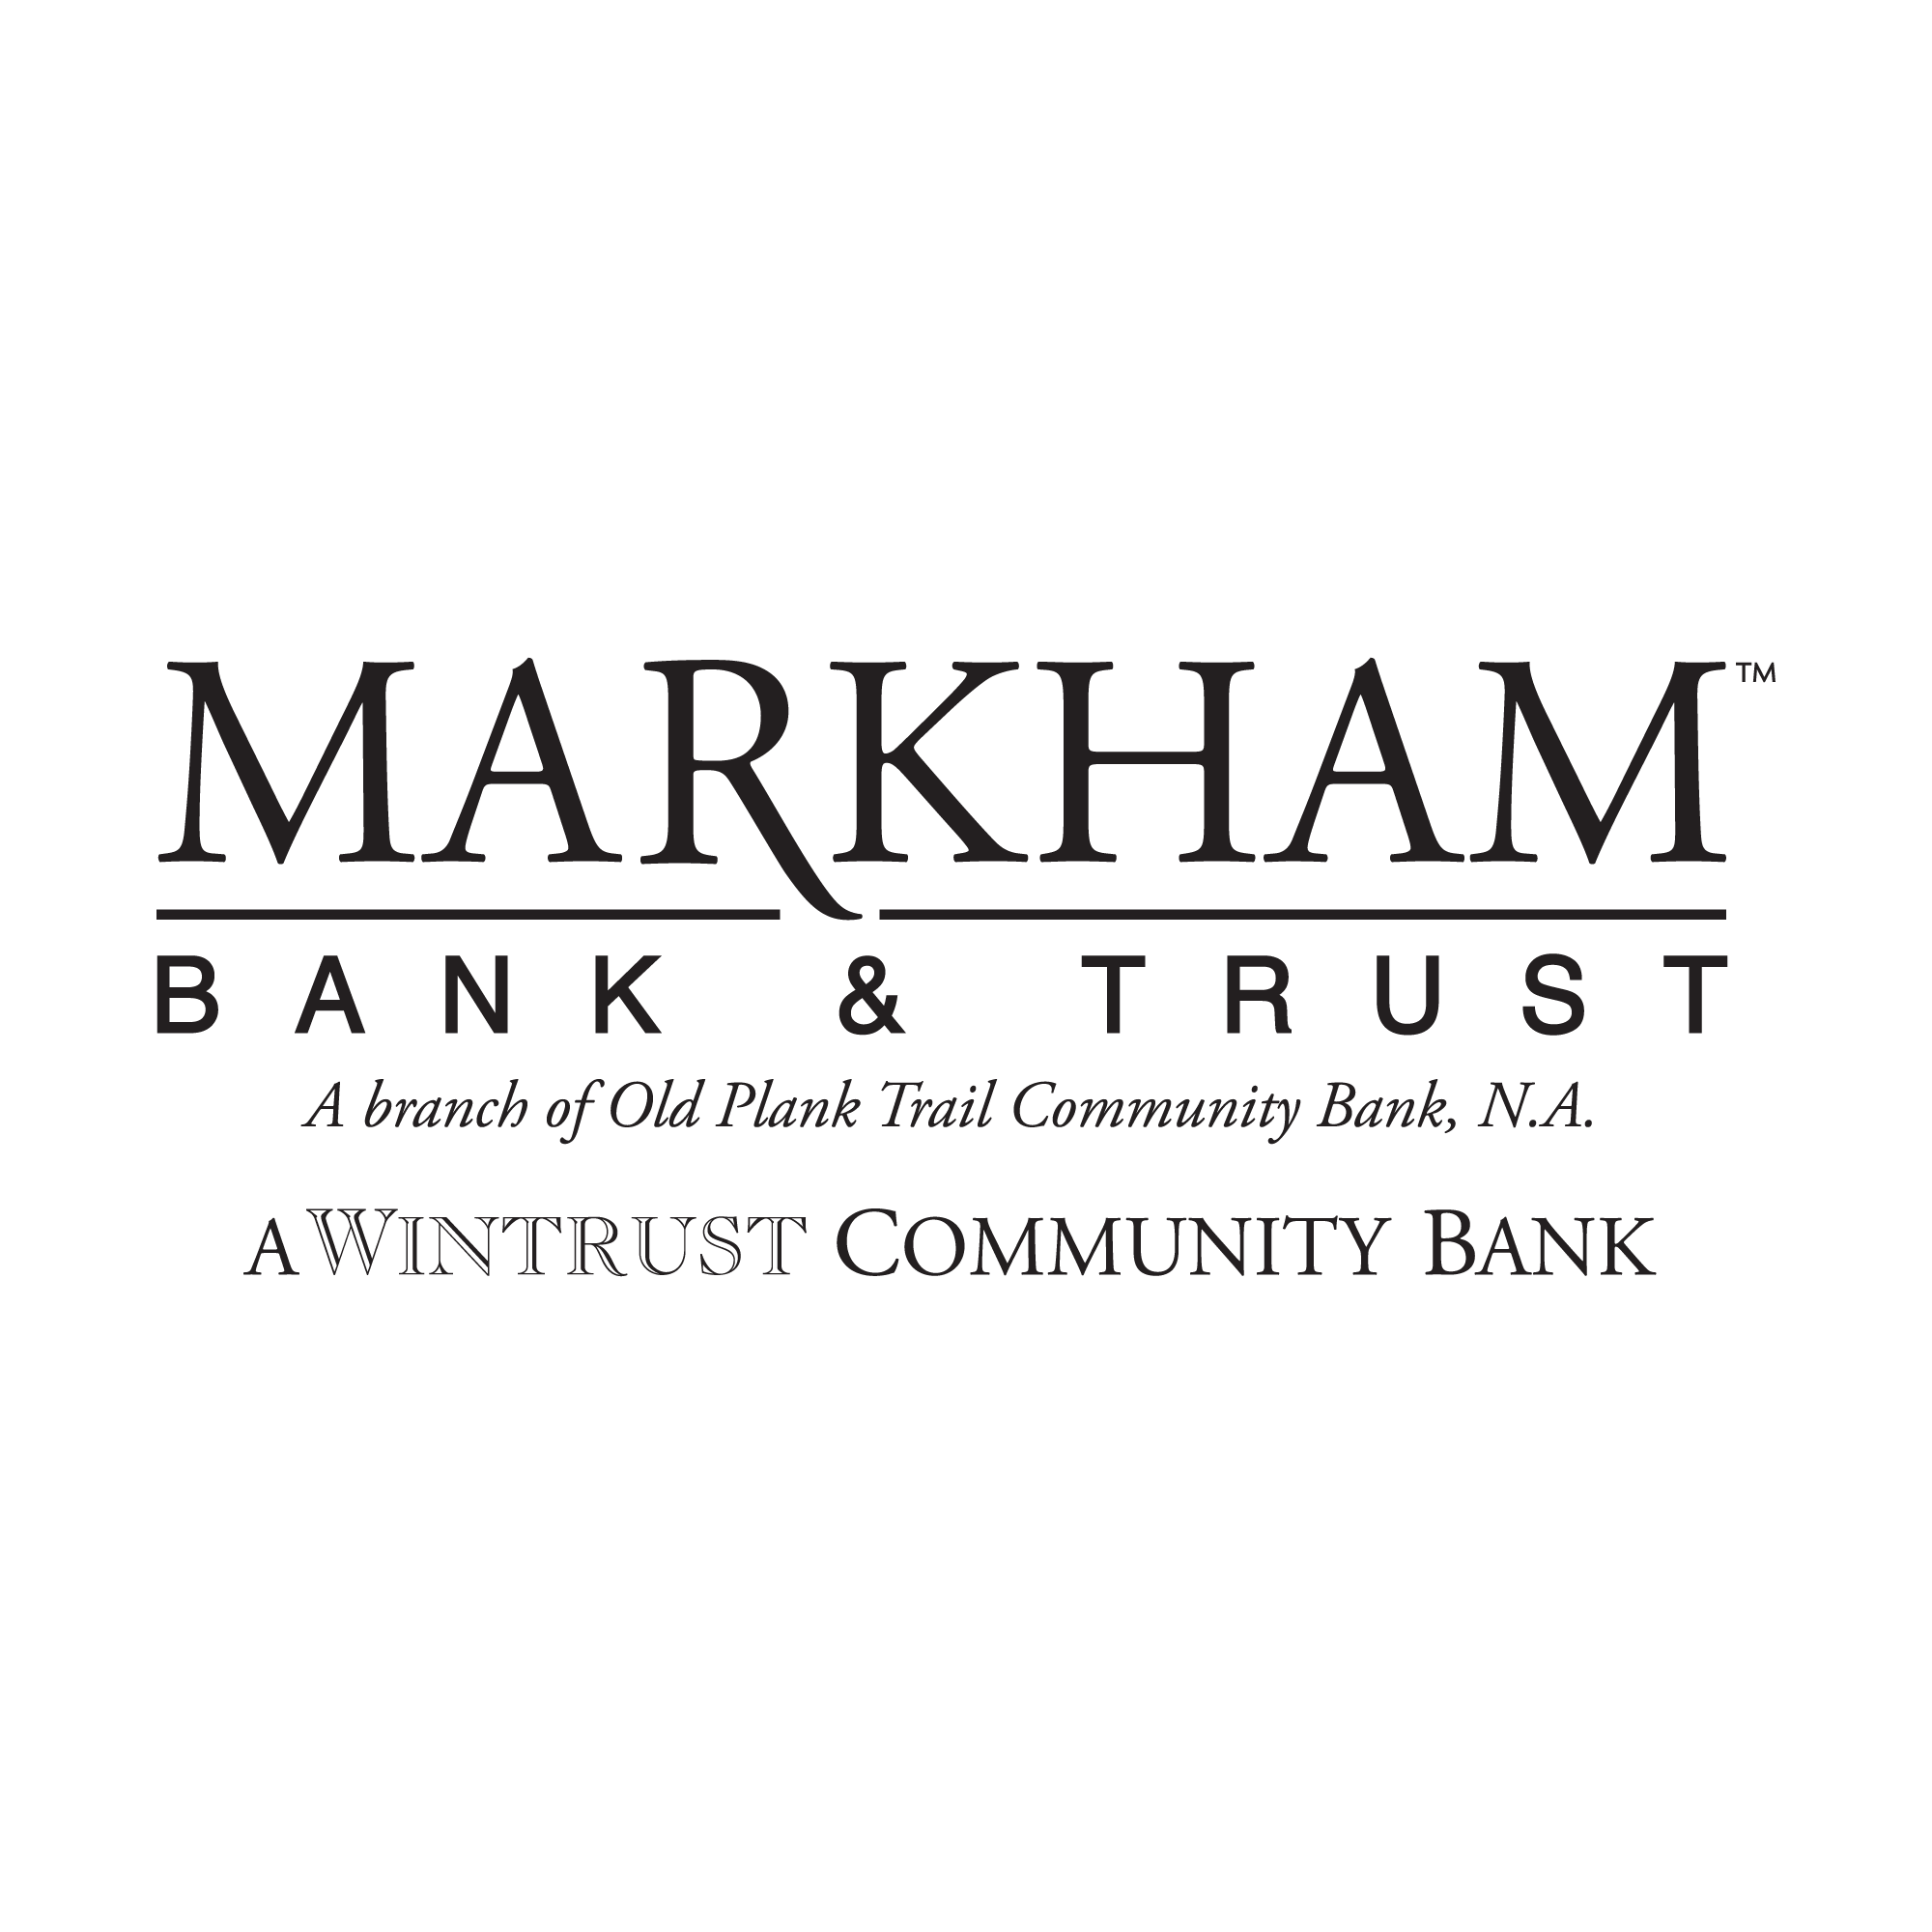 Markham Bank & Trust